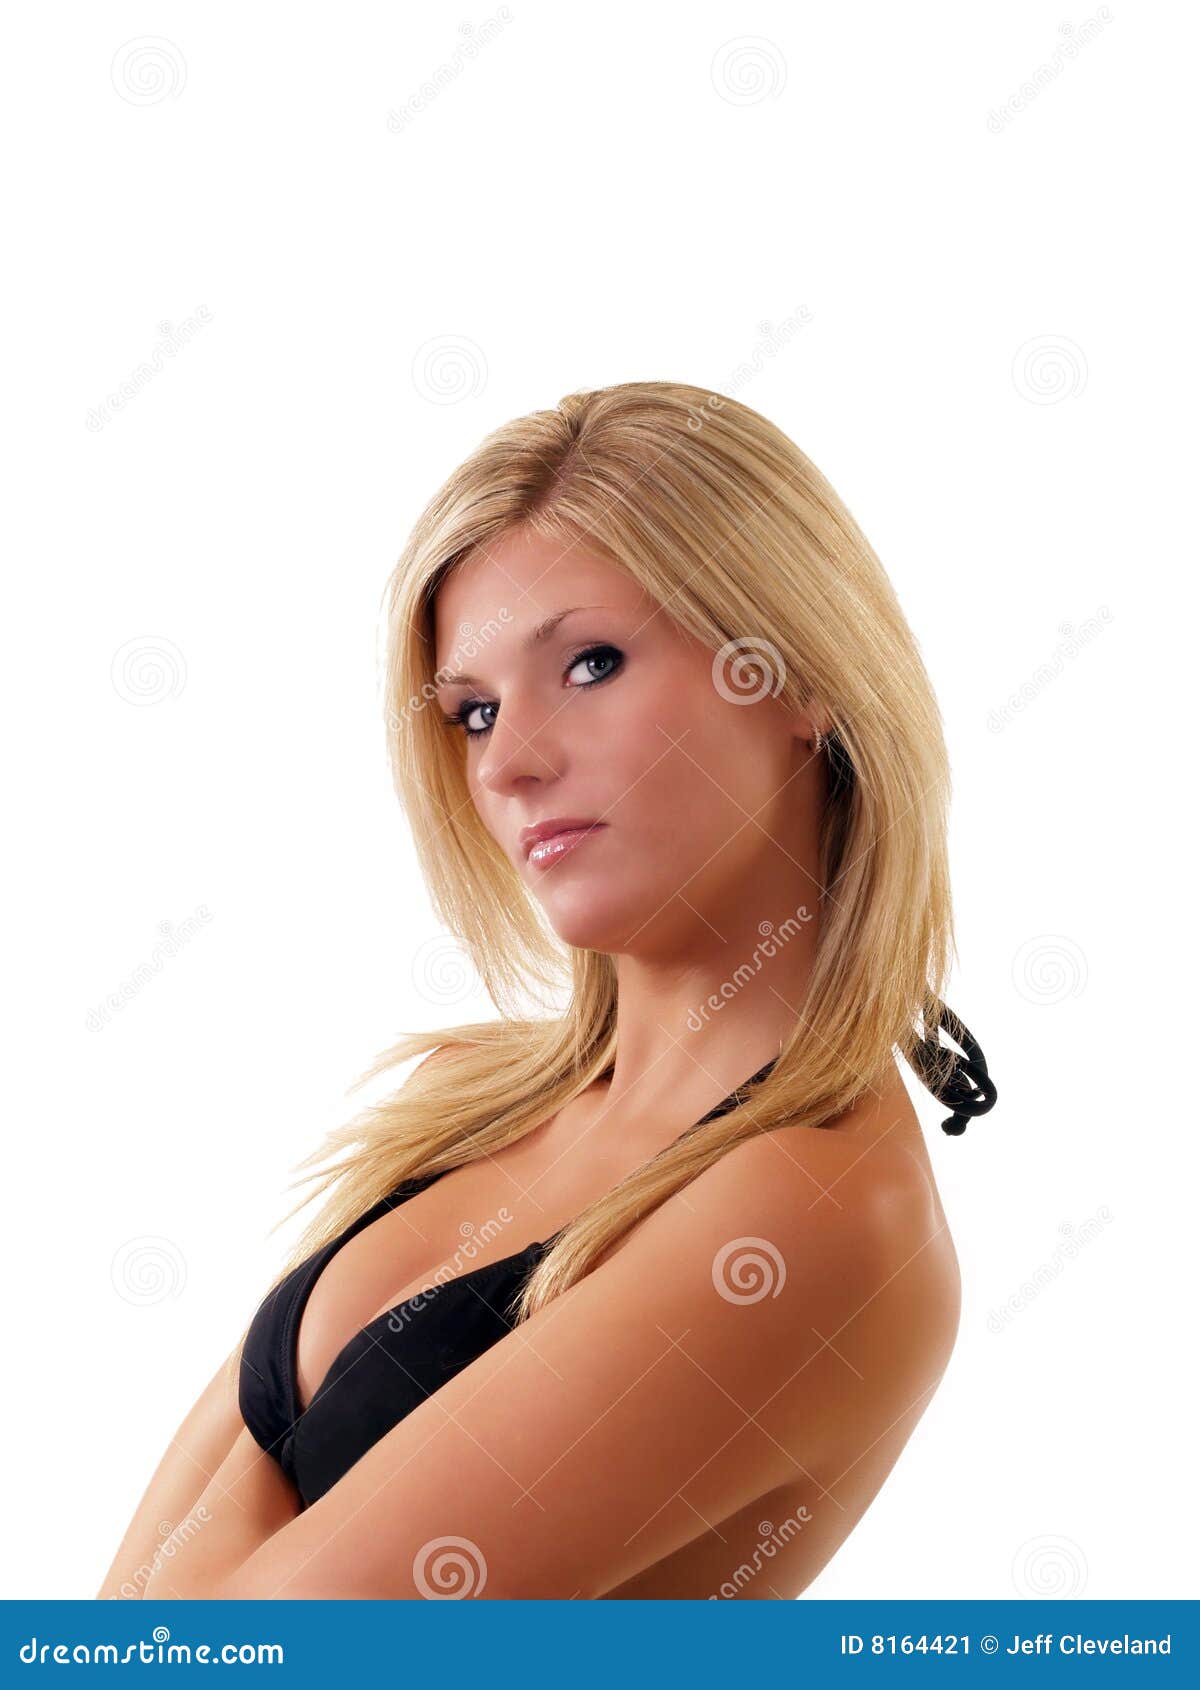 Erotic 18 teen blonde pics